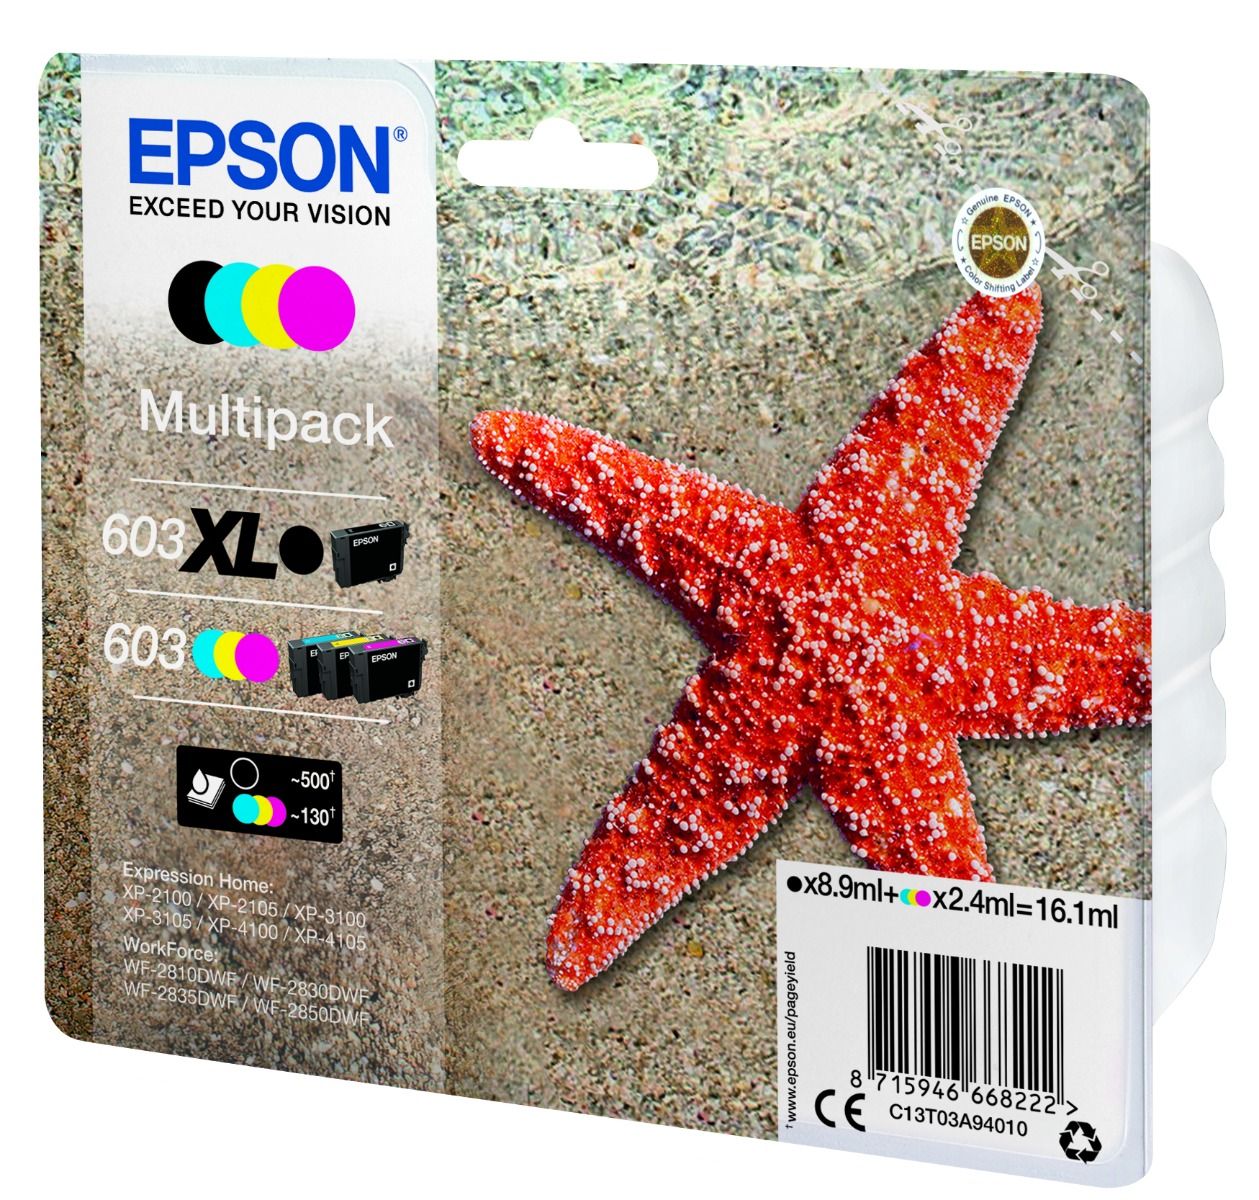 4 Color Epson 603XL Black, 603 CMY Ink Cartridge Multipack - T03A940